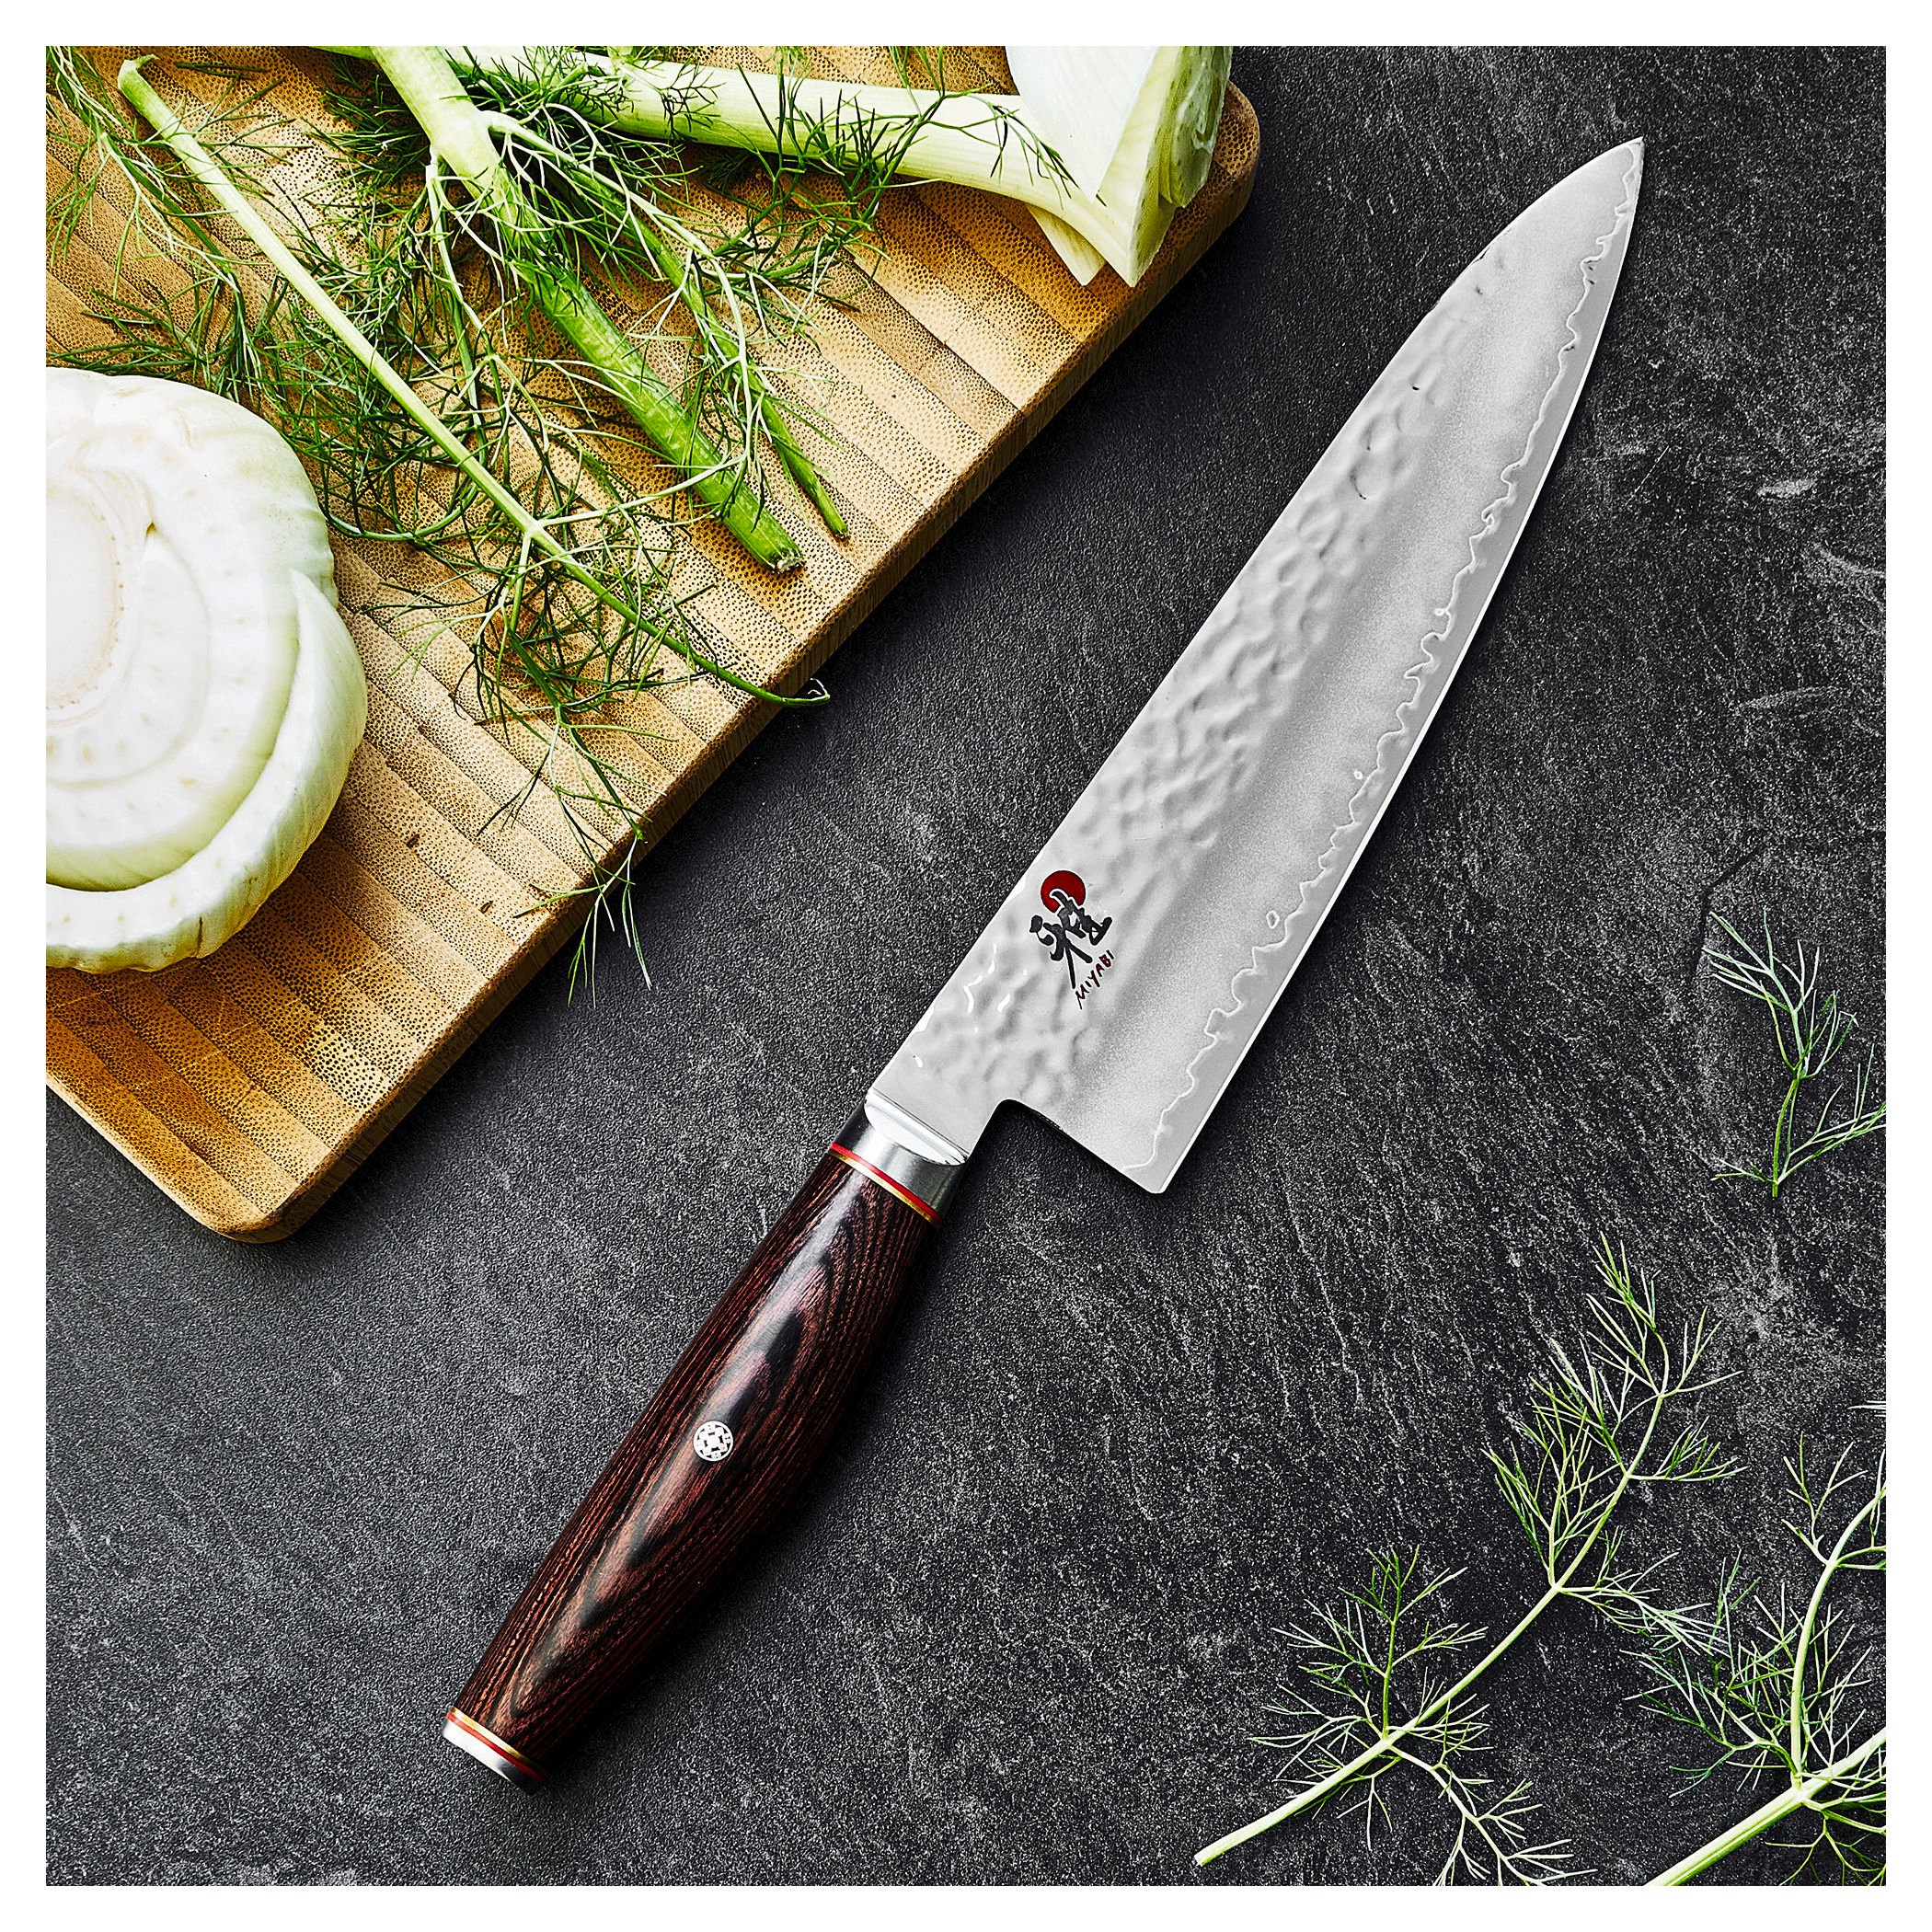 Miyabi Artisan Chef's Knife - 8 - SG2 Knives – Cutlery and More